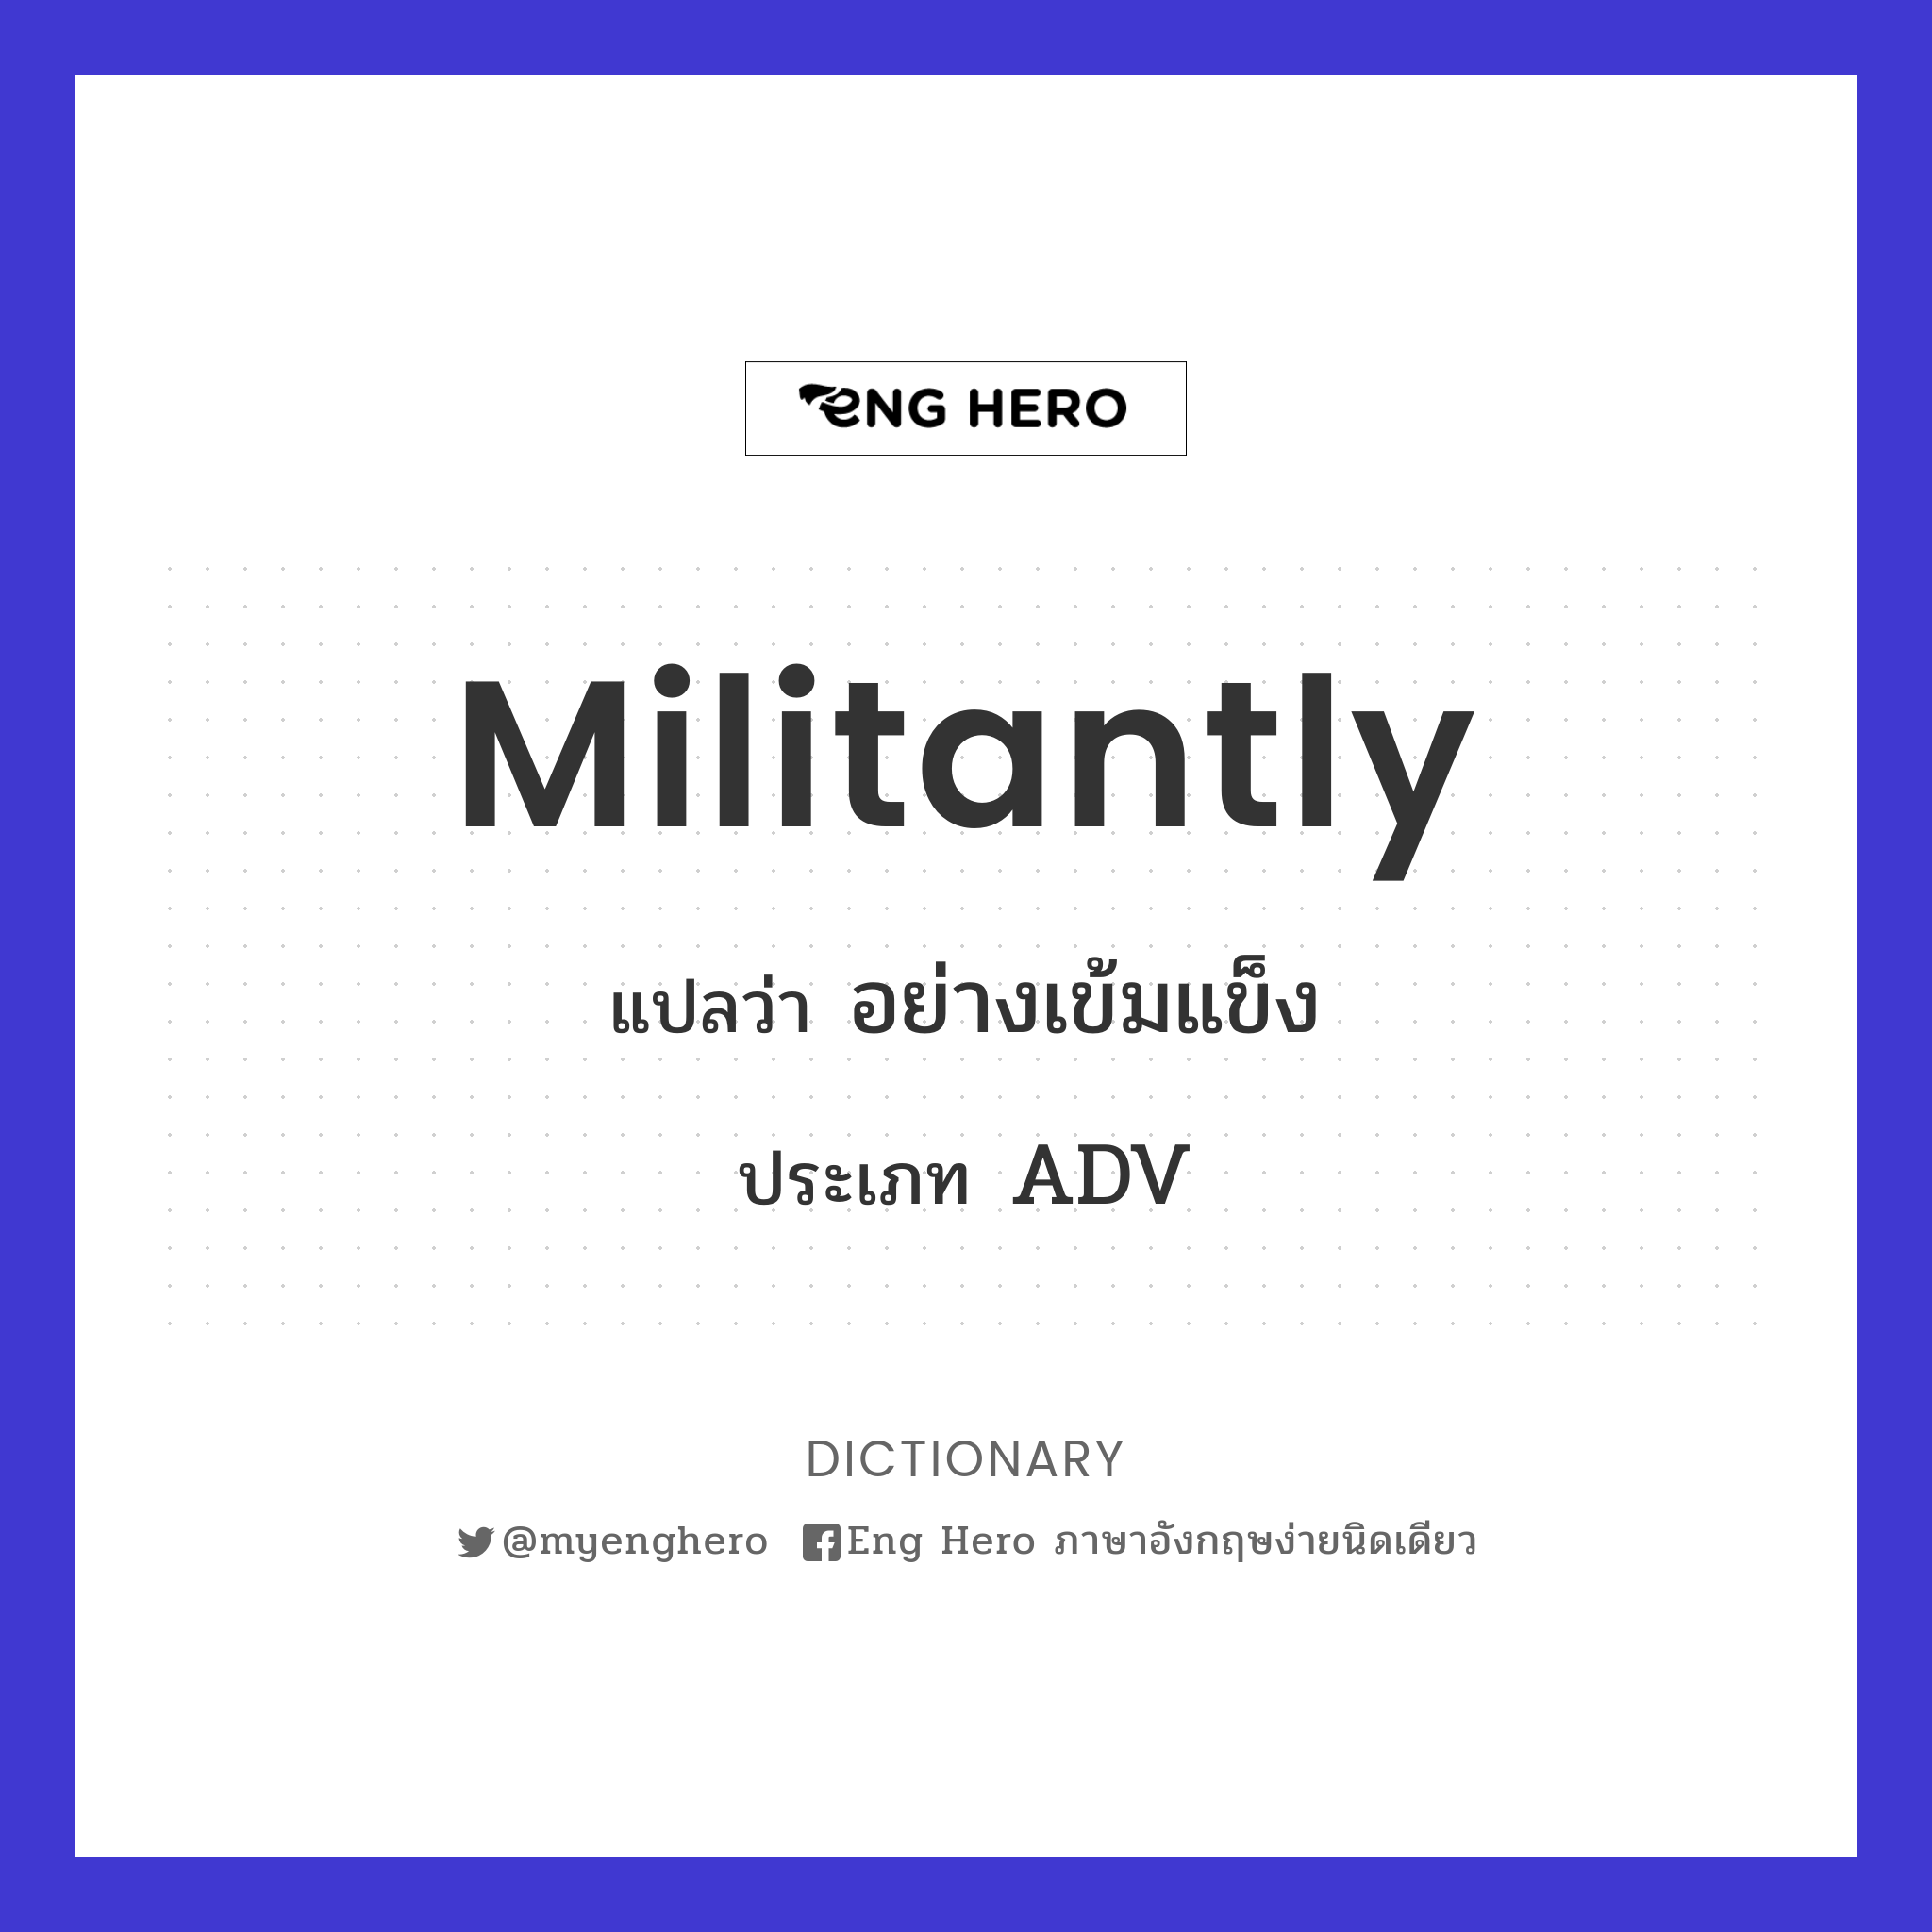 militantly